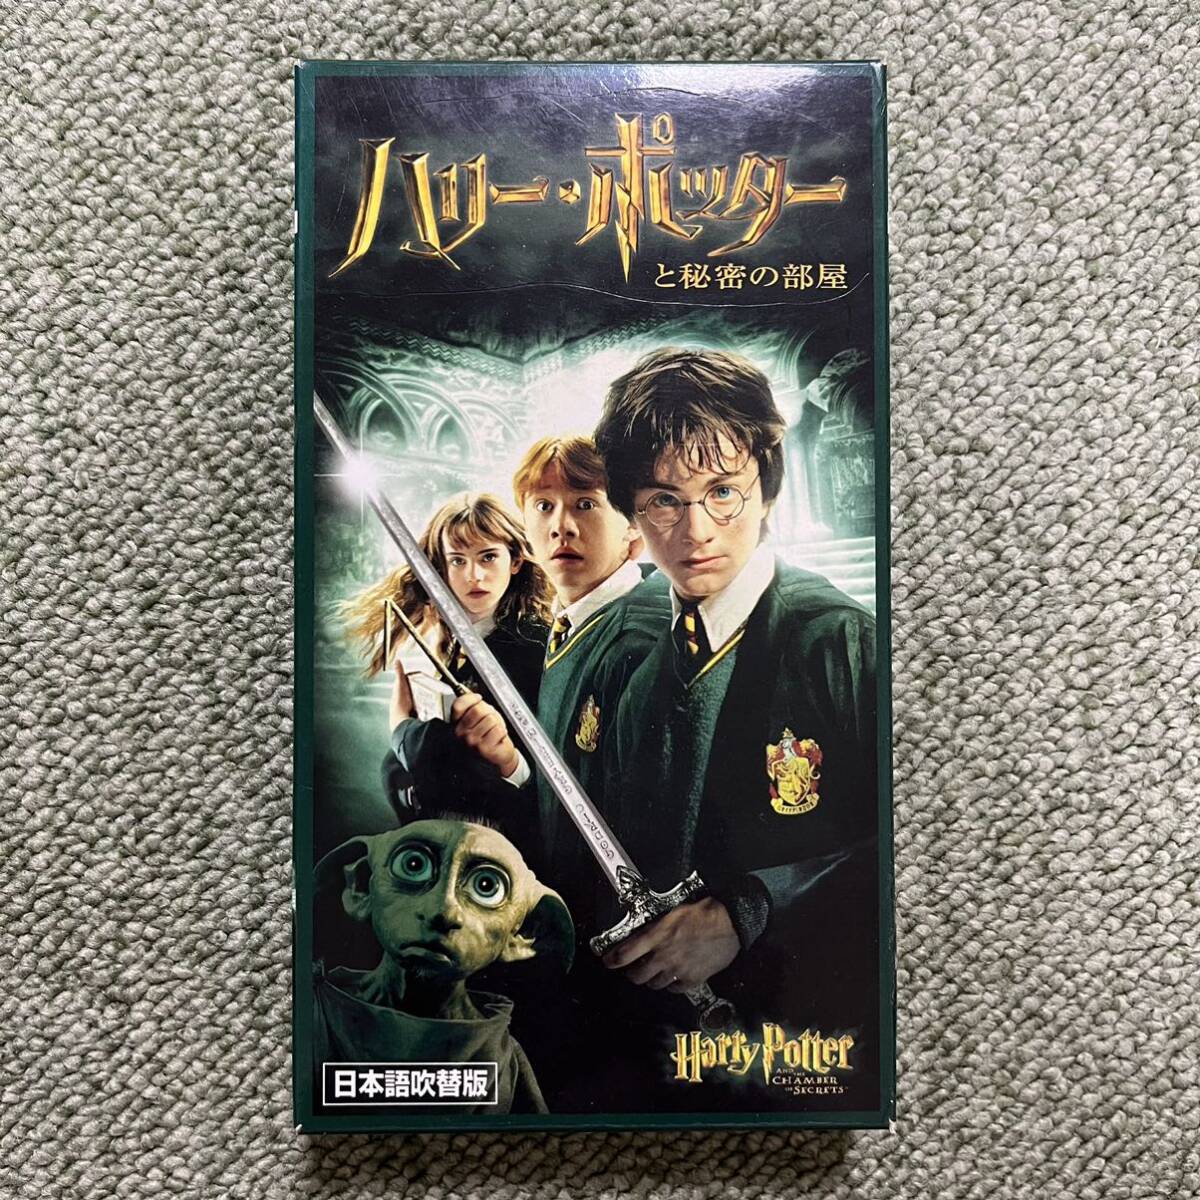 Harry Potter ハリー ポッター と秘密の部屋 WARNER VIDEO VHS